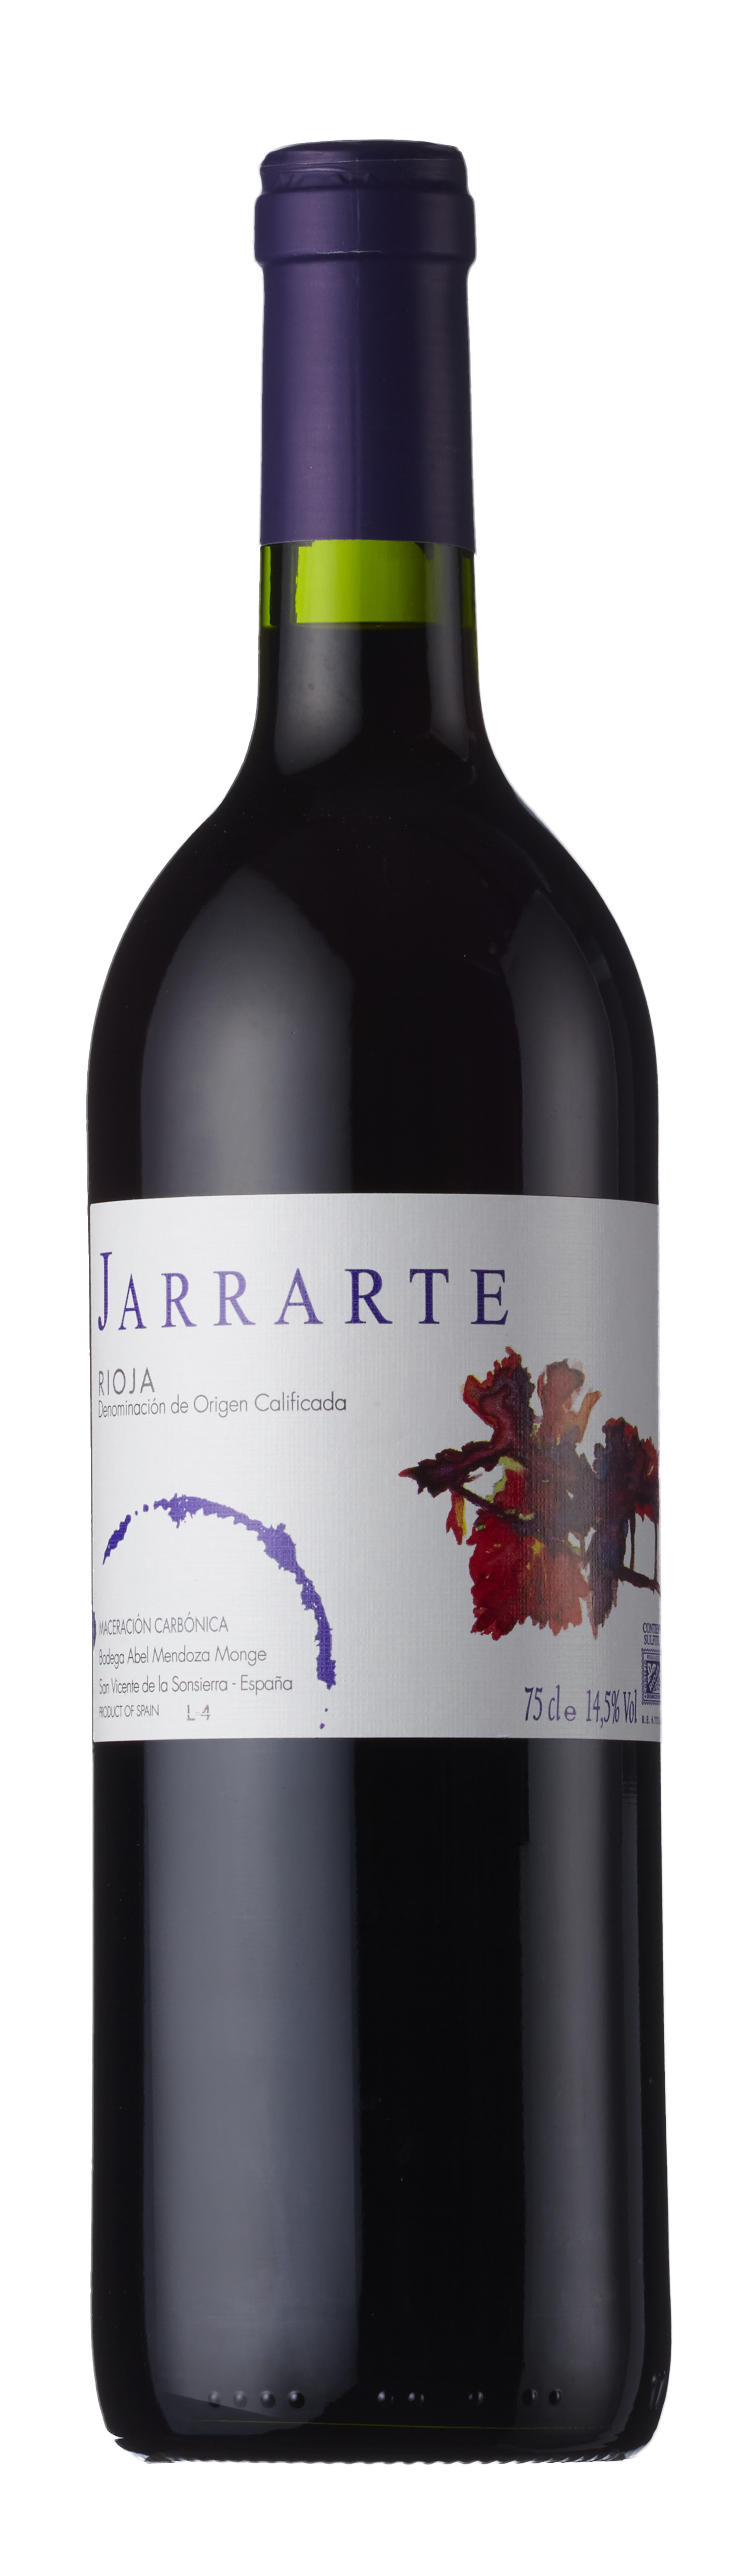 Bottle shot - Abel Mendoza, Jarrarte Tinto, DOCa Rioja, Spain